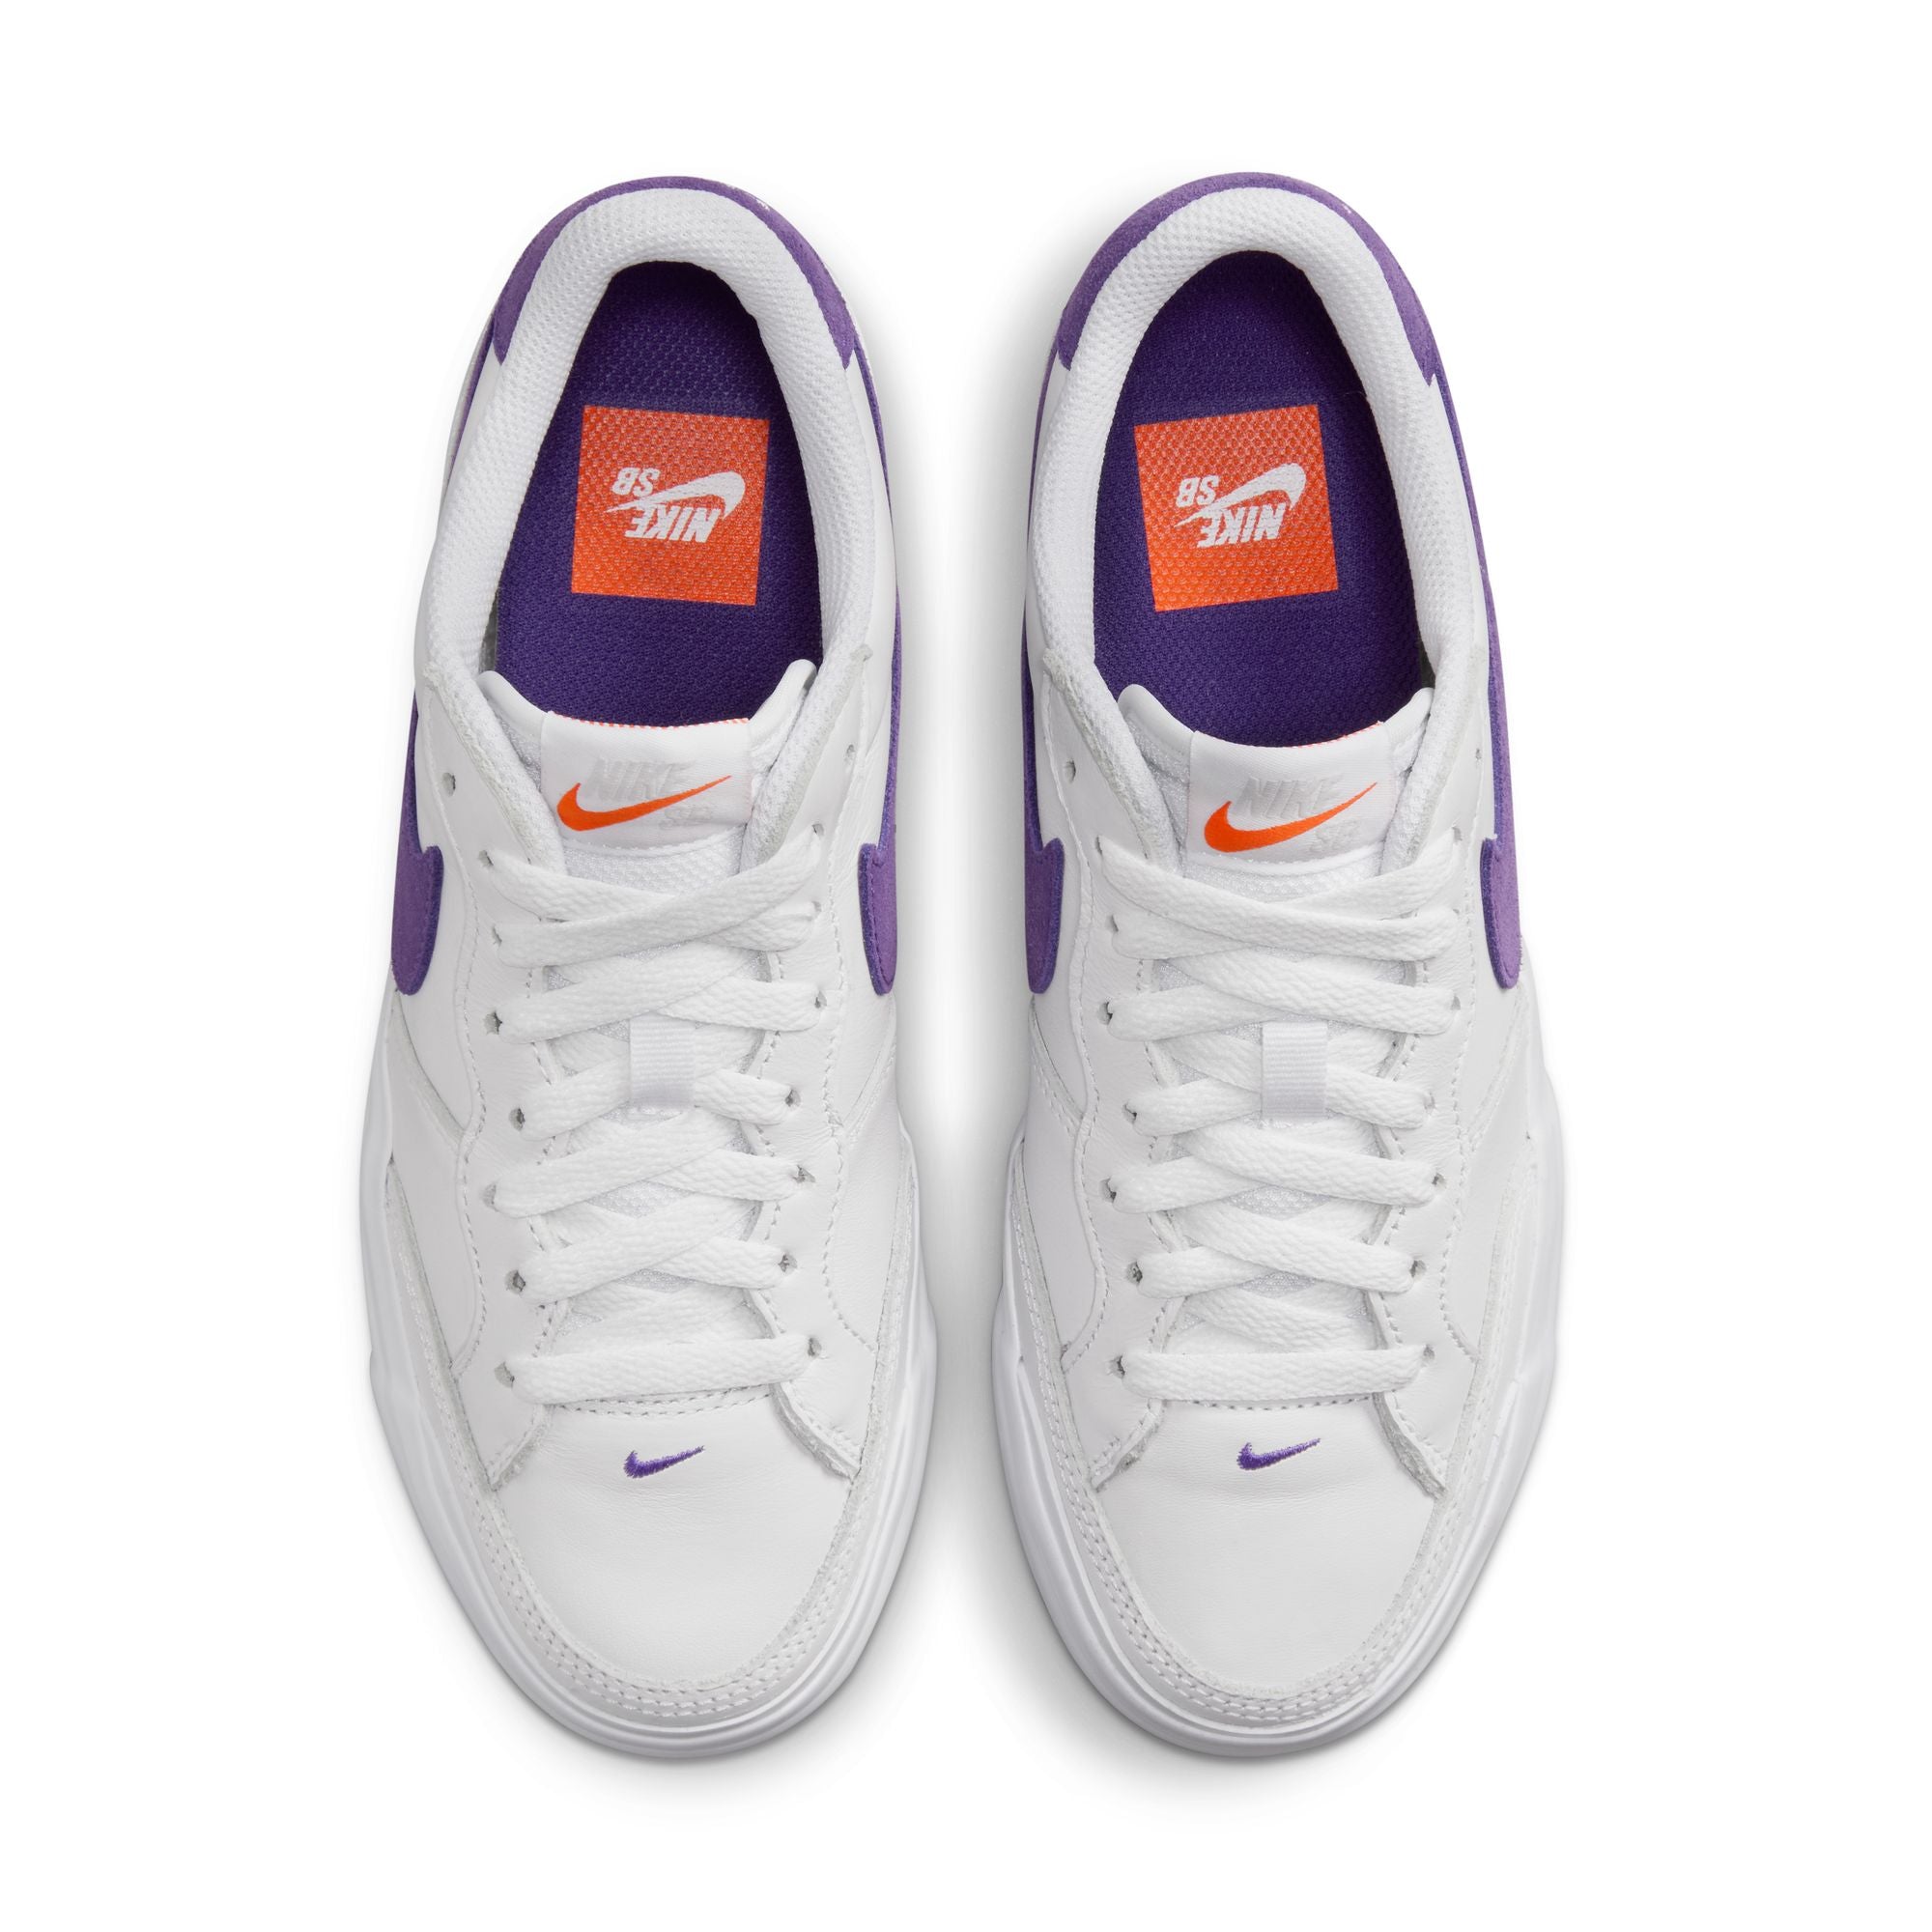 Nike SB ISO Pogo Plus Shoes - Court Purple/White-Light Gum